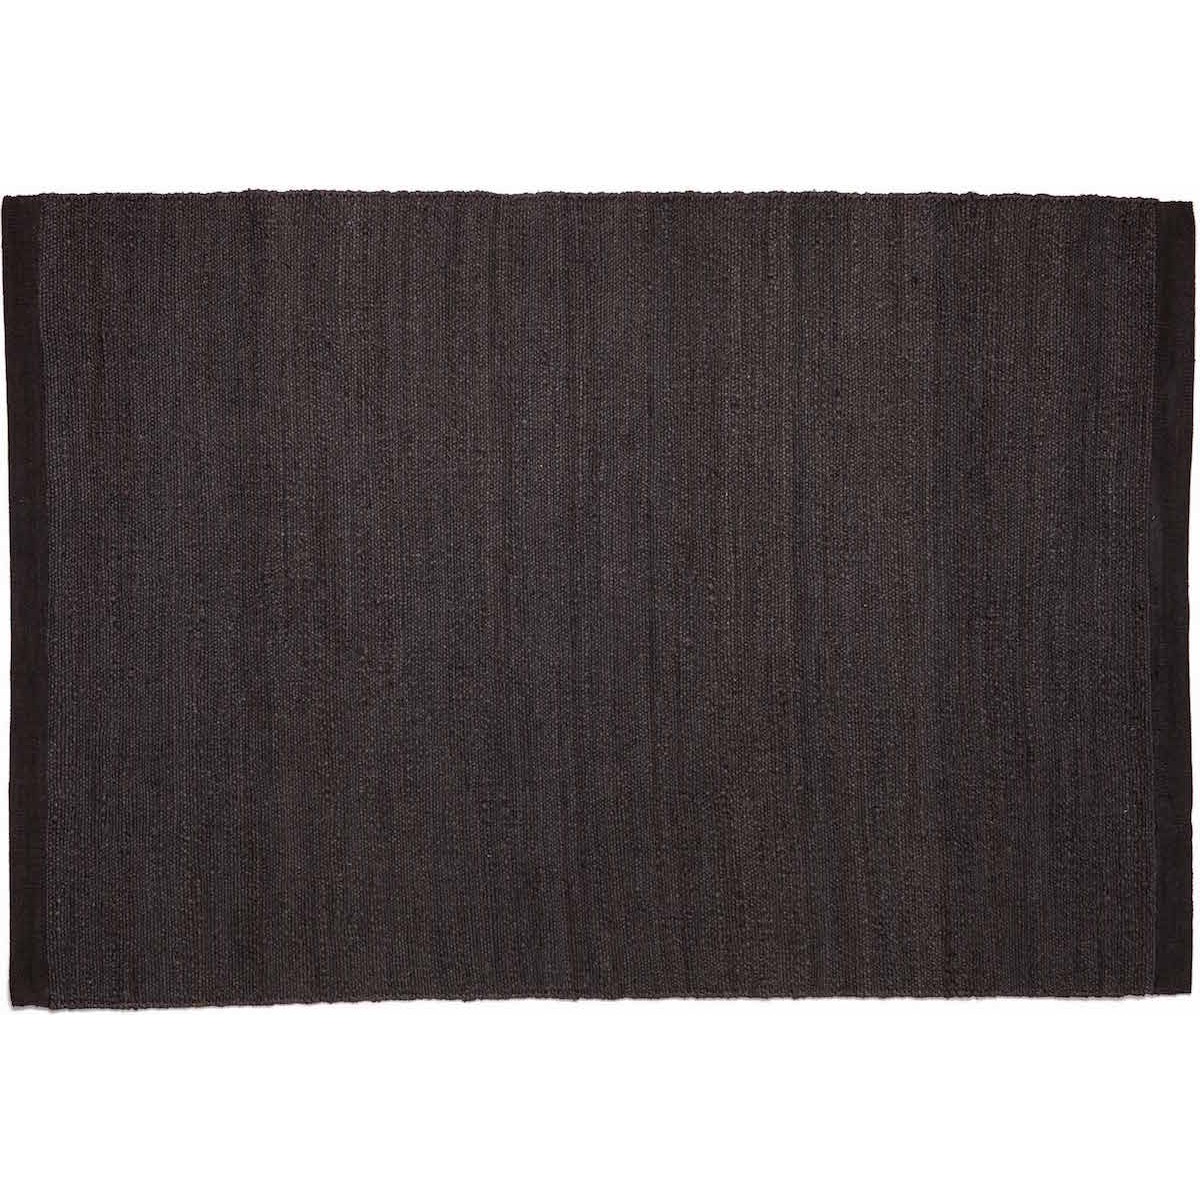 170x240cm - black - Herb rug